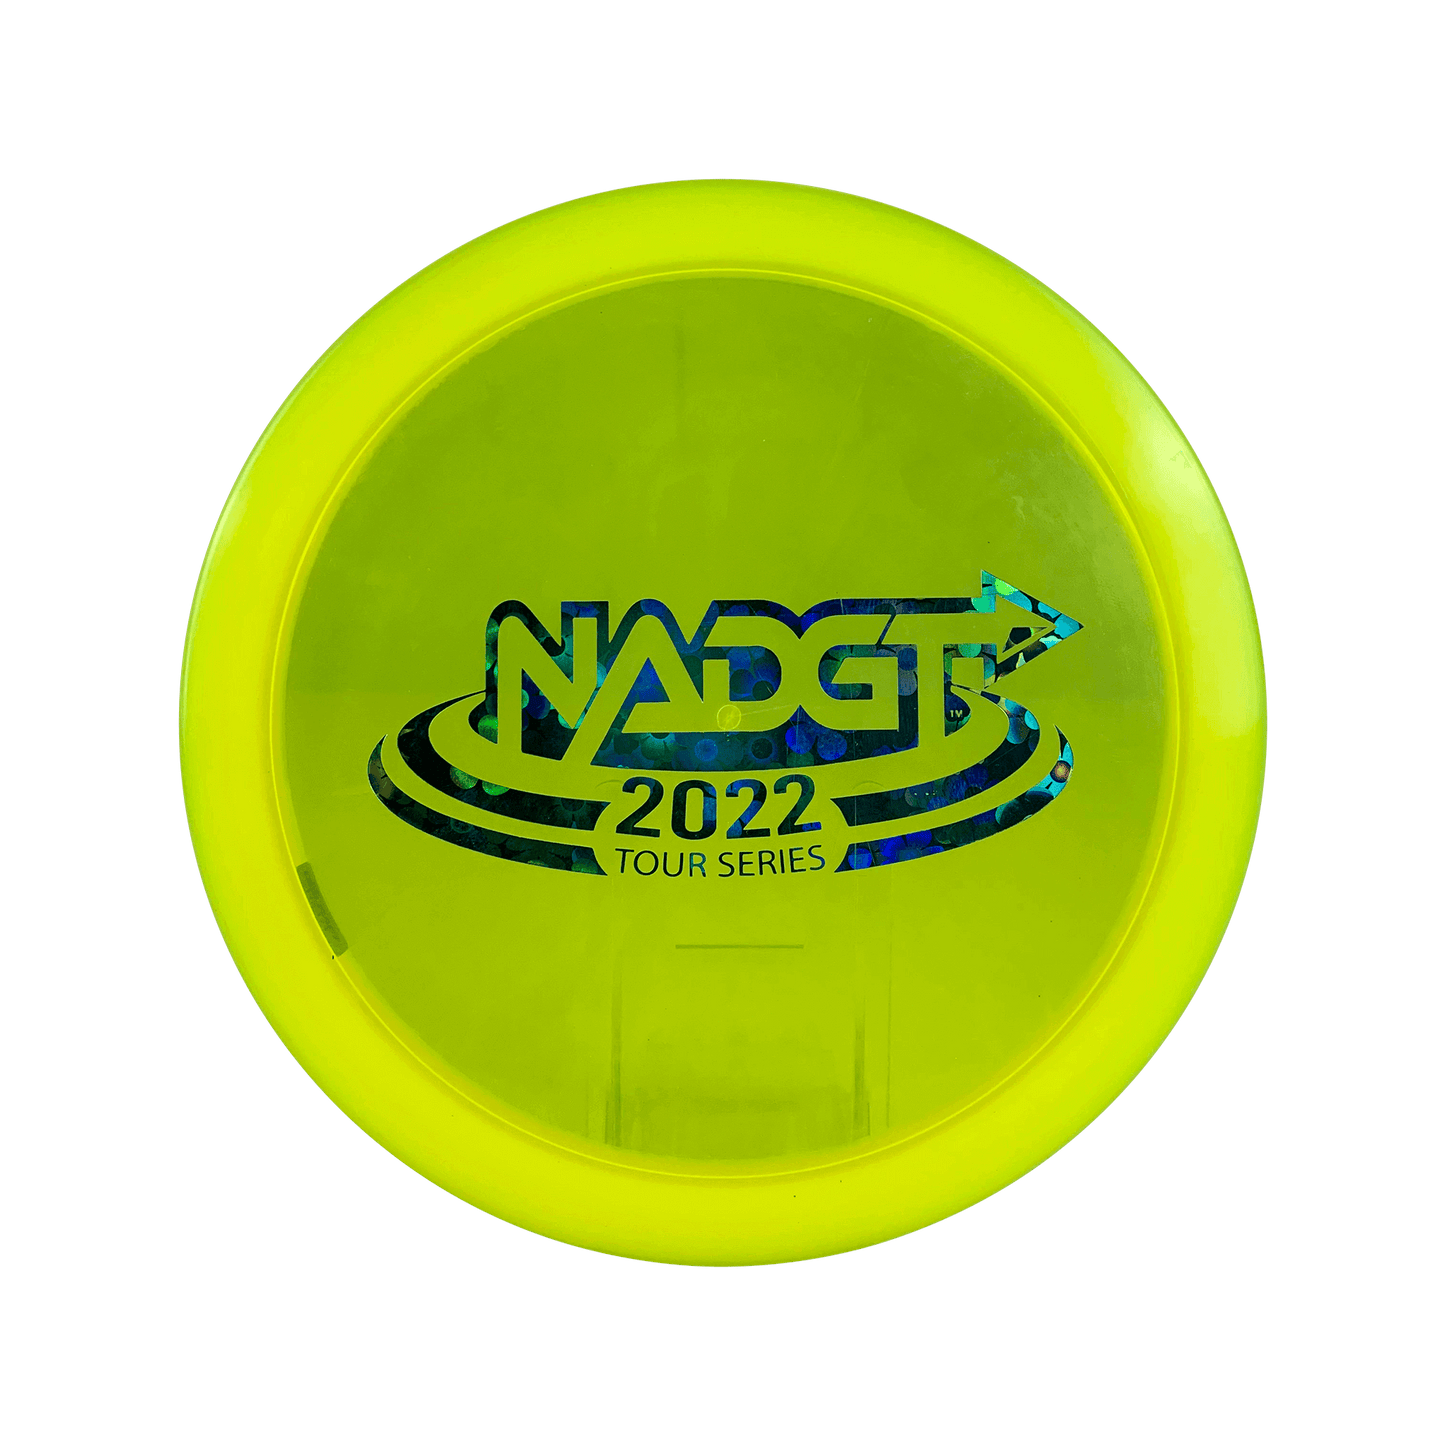 Z Raptor - NADGT Tour Series 2022 Disc Discraft yellow 173 